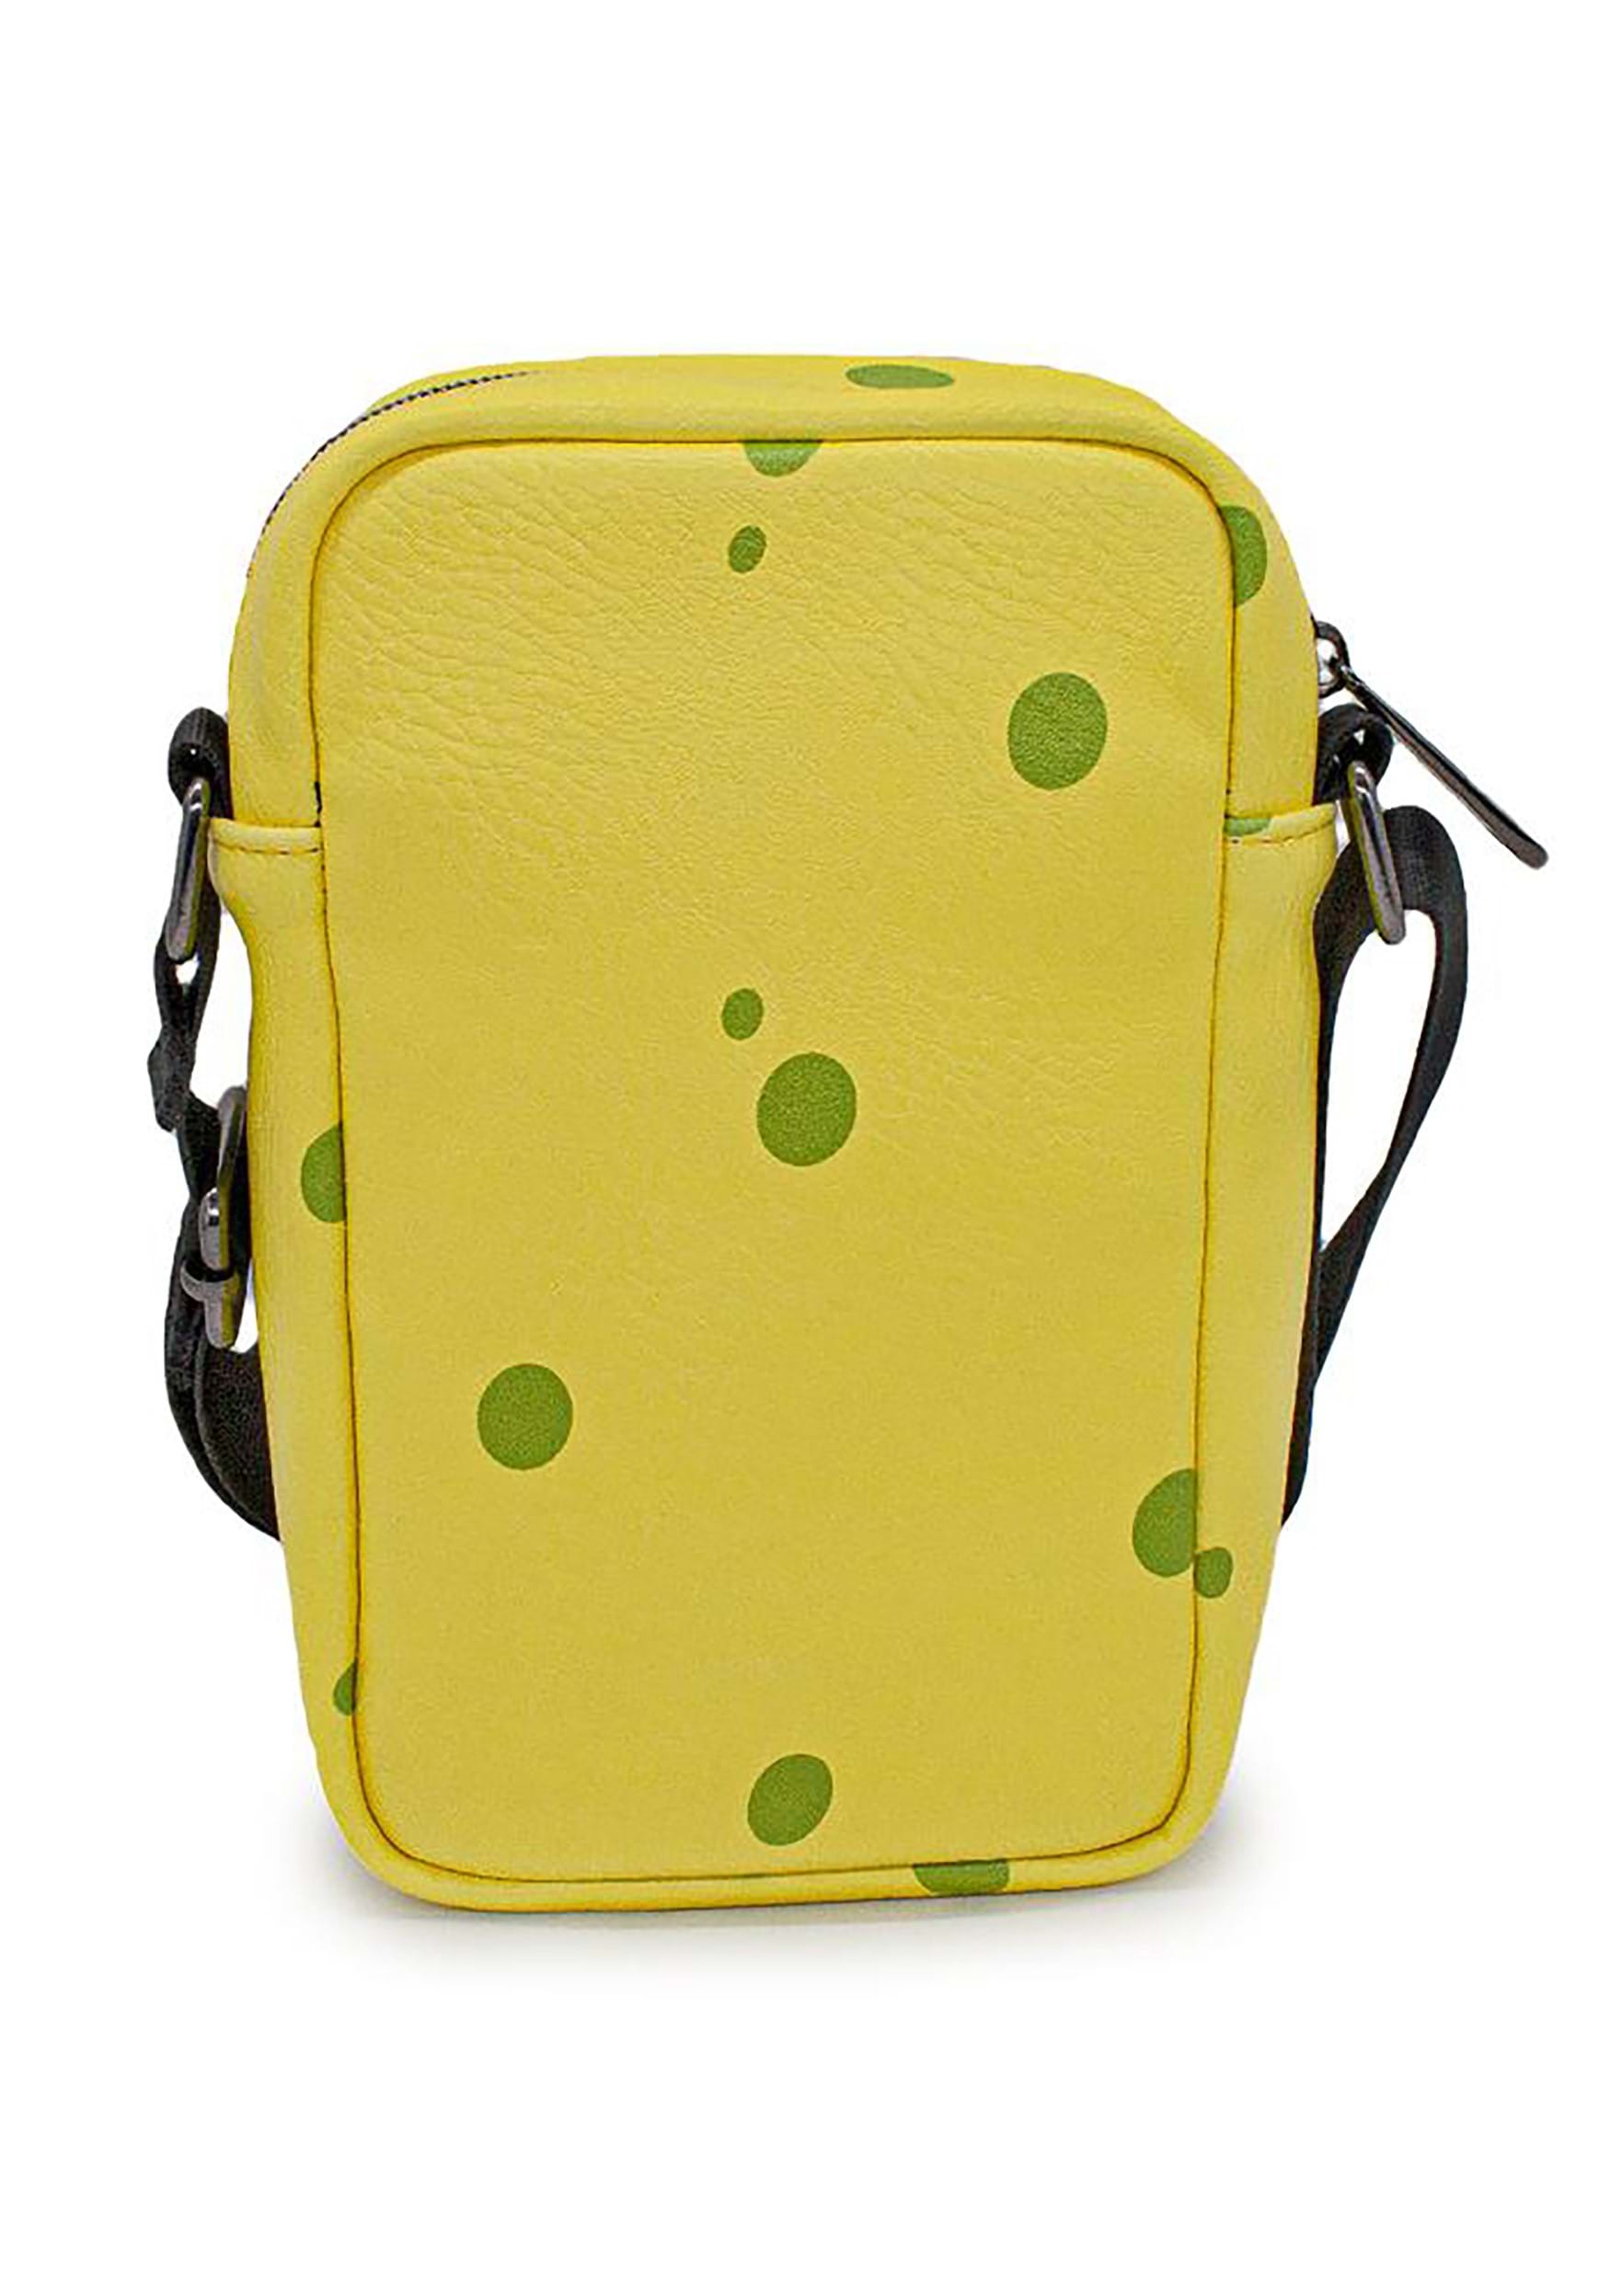 Spongebob Squarepants Crossbody Bag